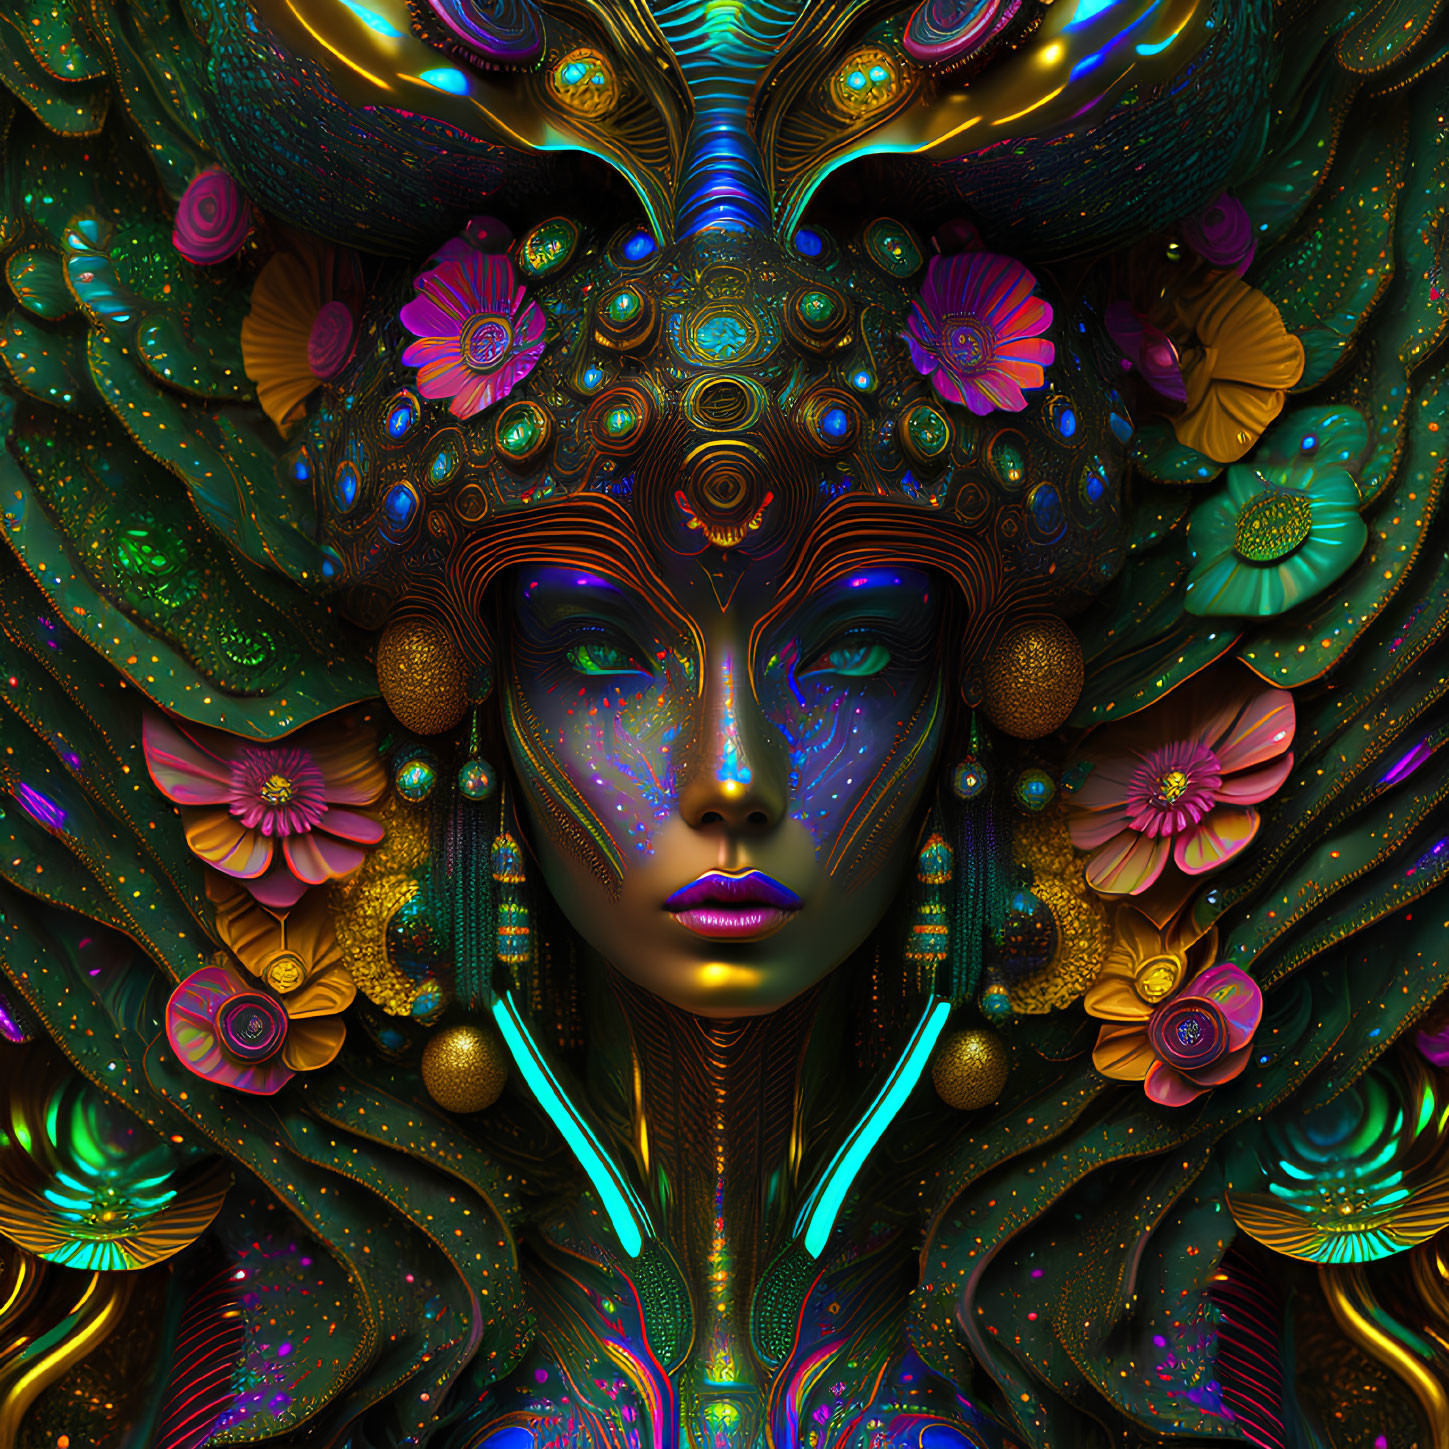 Colorful digital artwork: Female figure with elaborate headdress